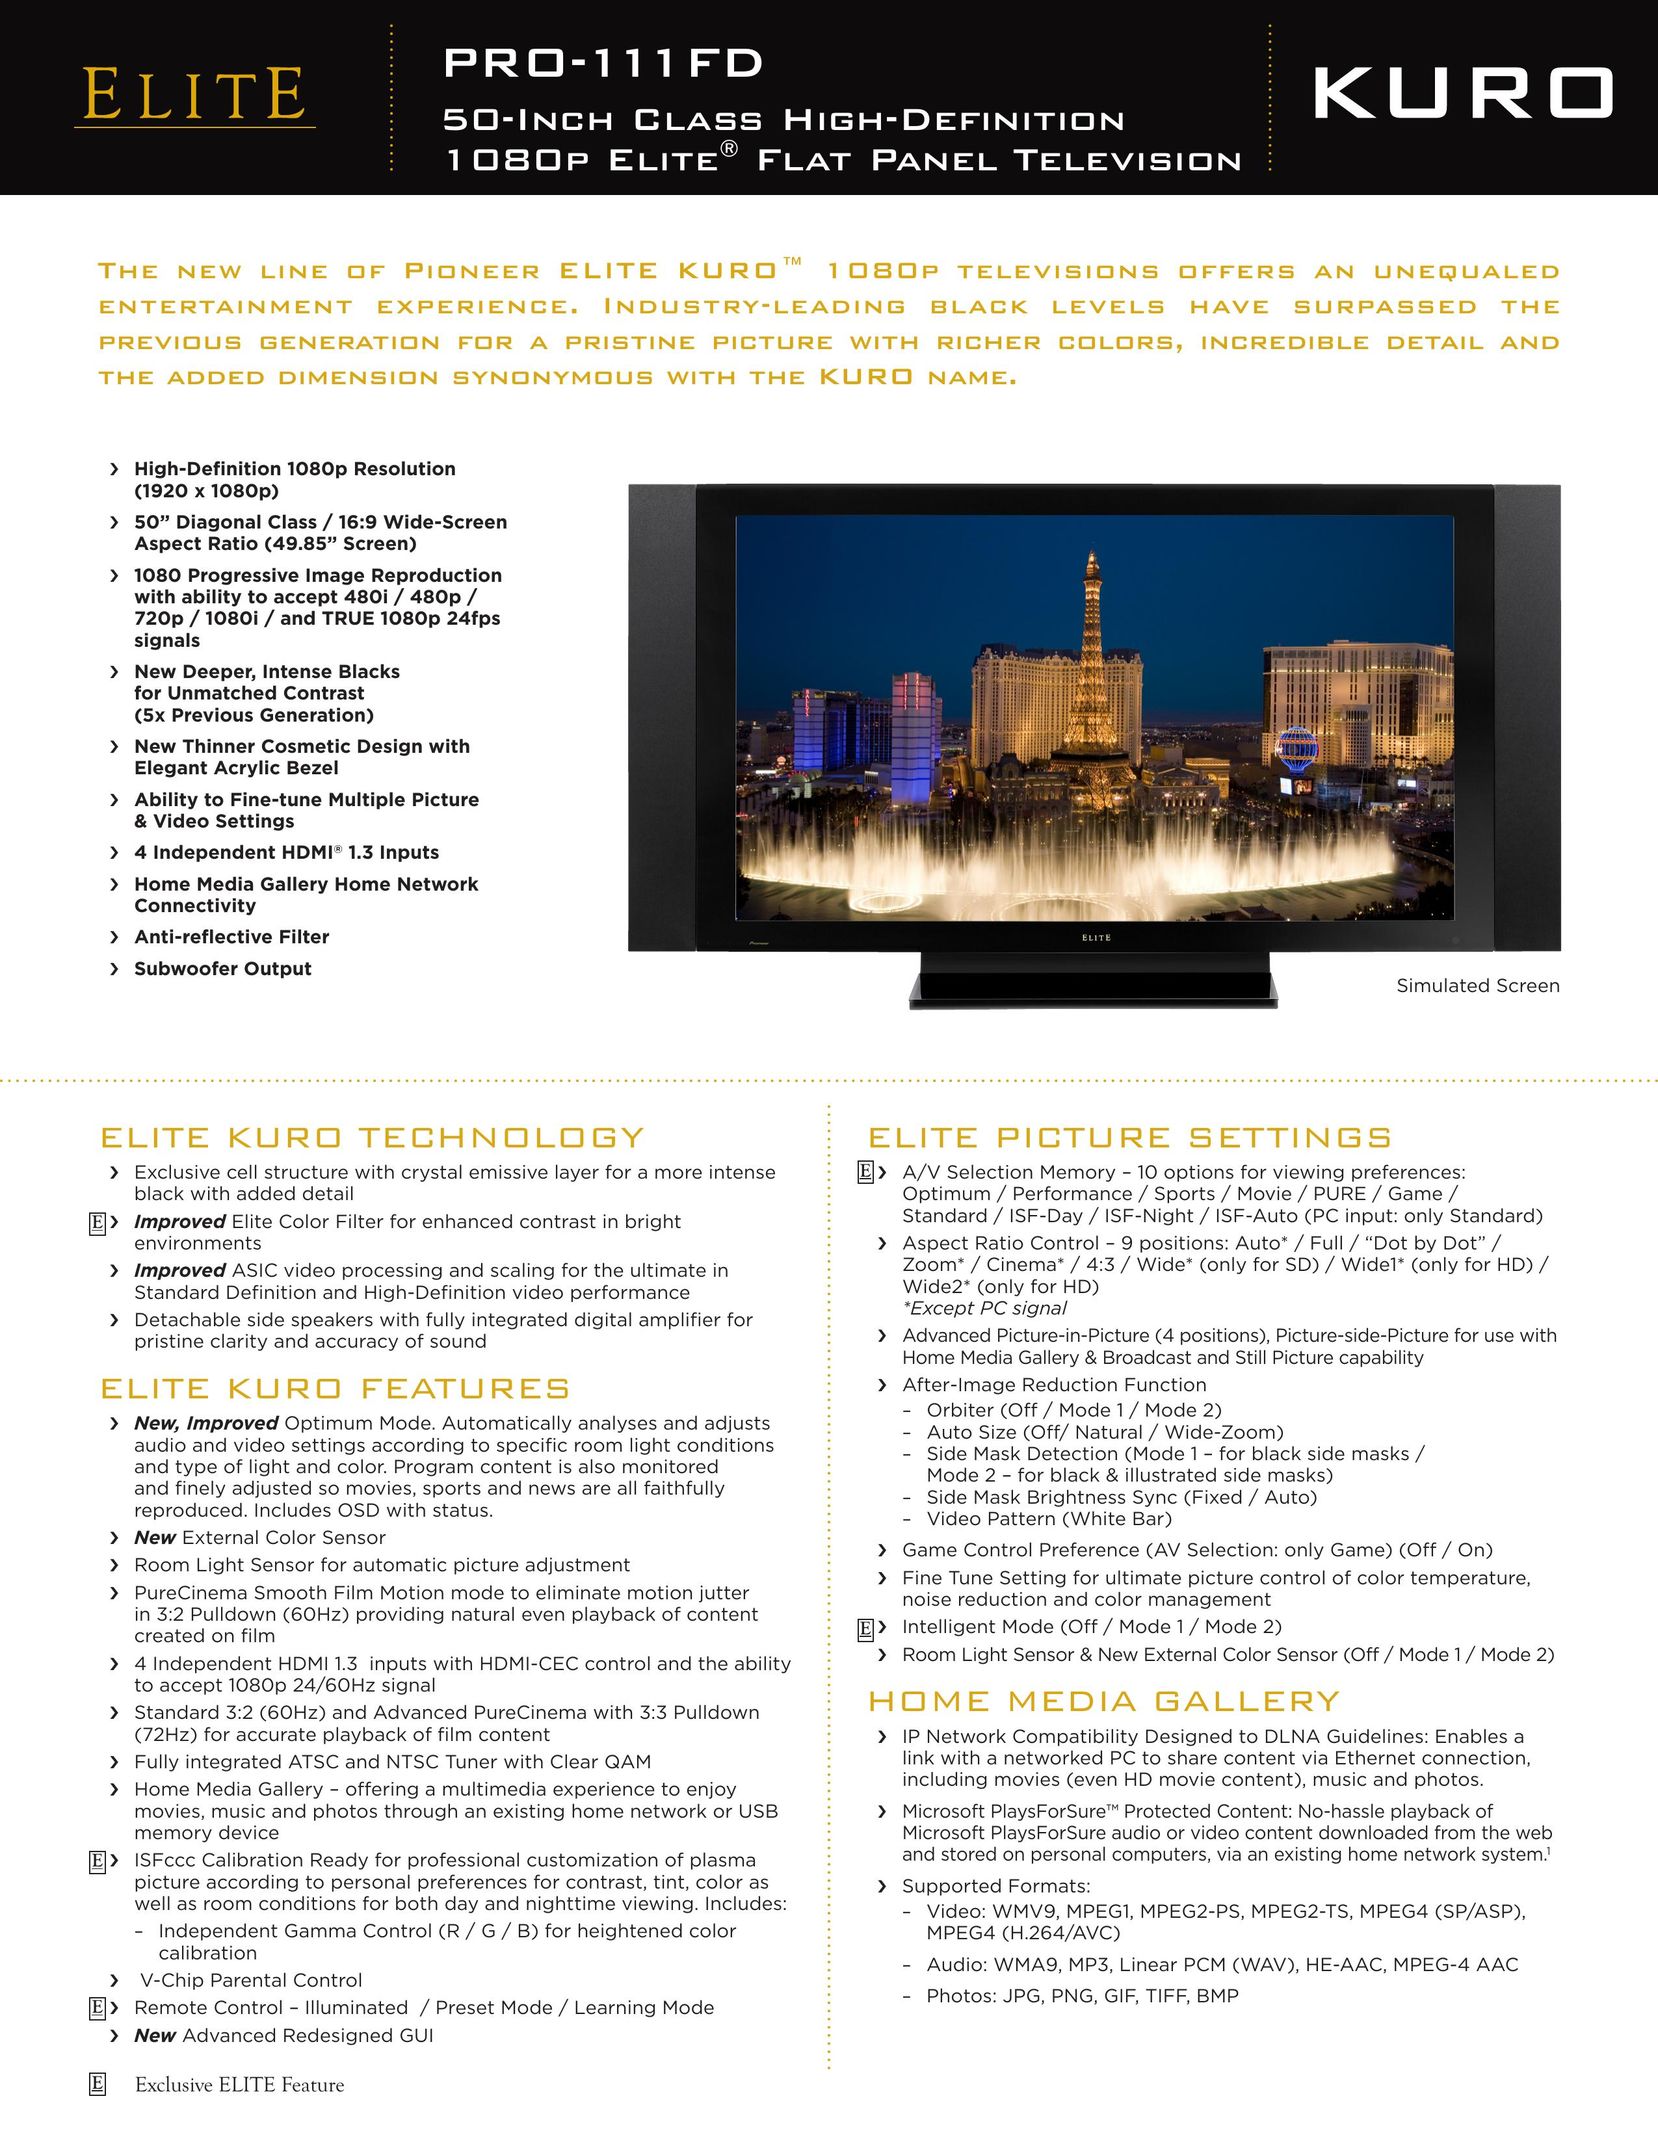 Elite PRO-111FD Flat Panel Television User Manual